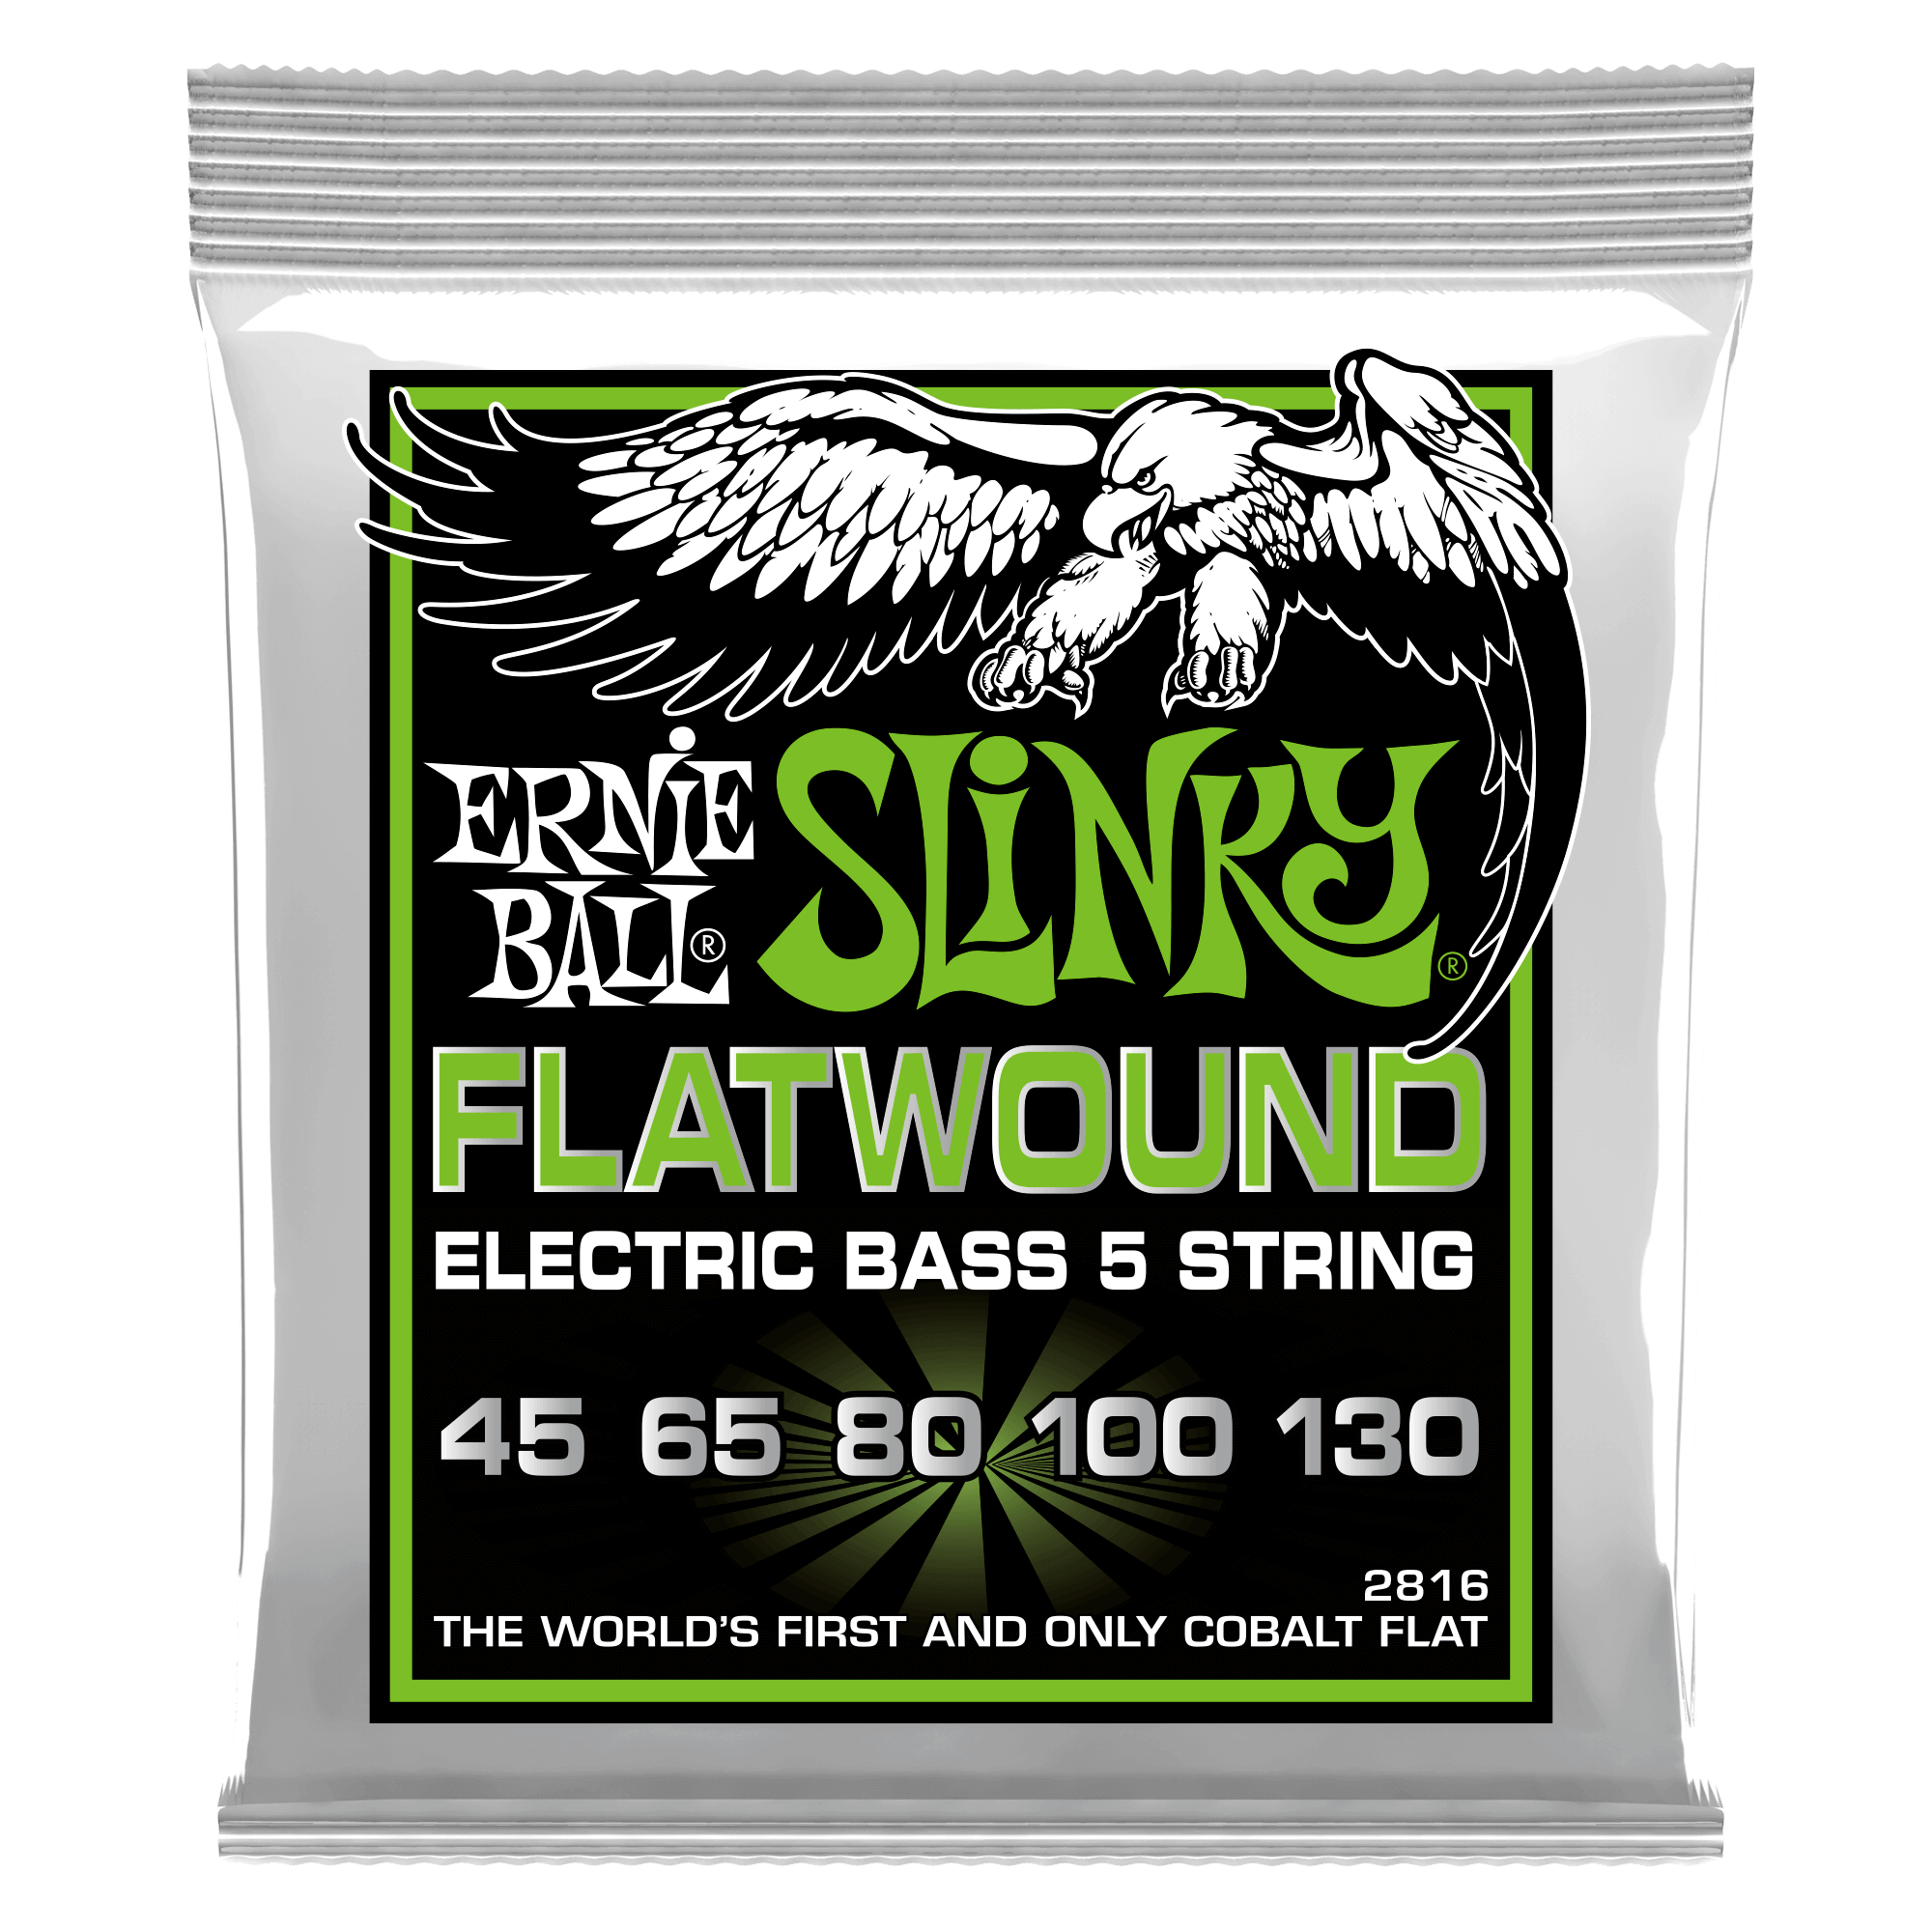 Ernie Ball 2816 Regular Slinky 5-String Flatwound Electric Bass Strings - 45-130